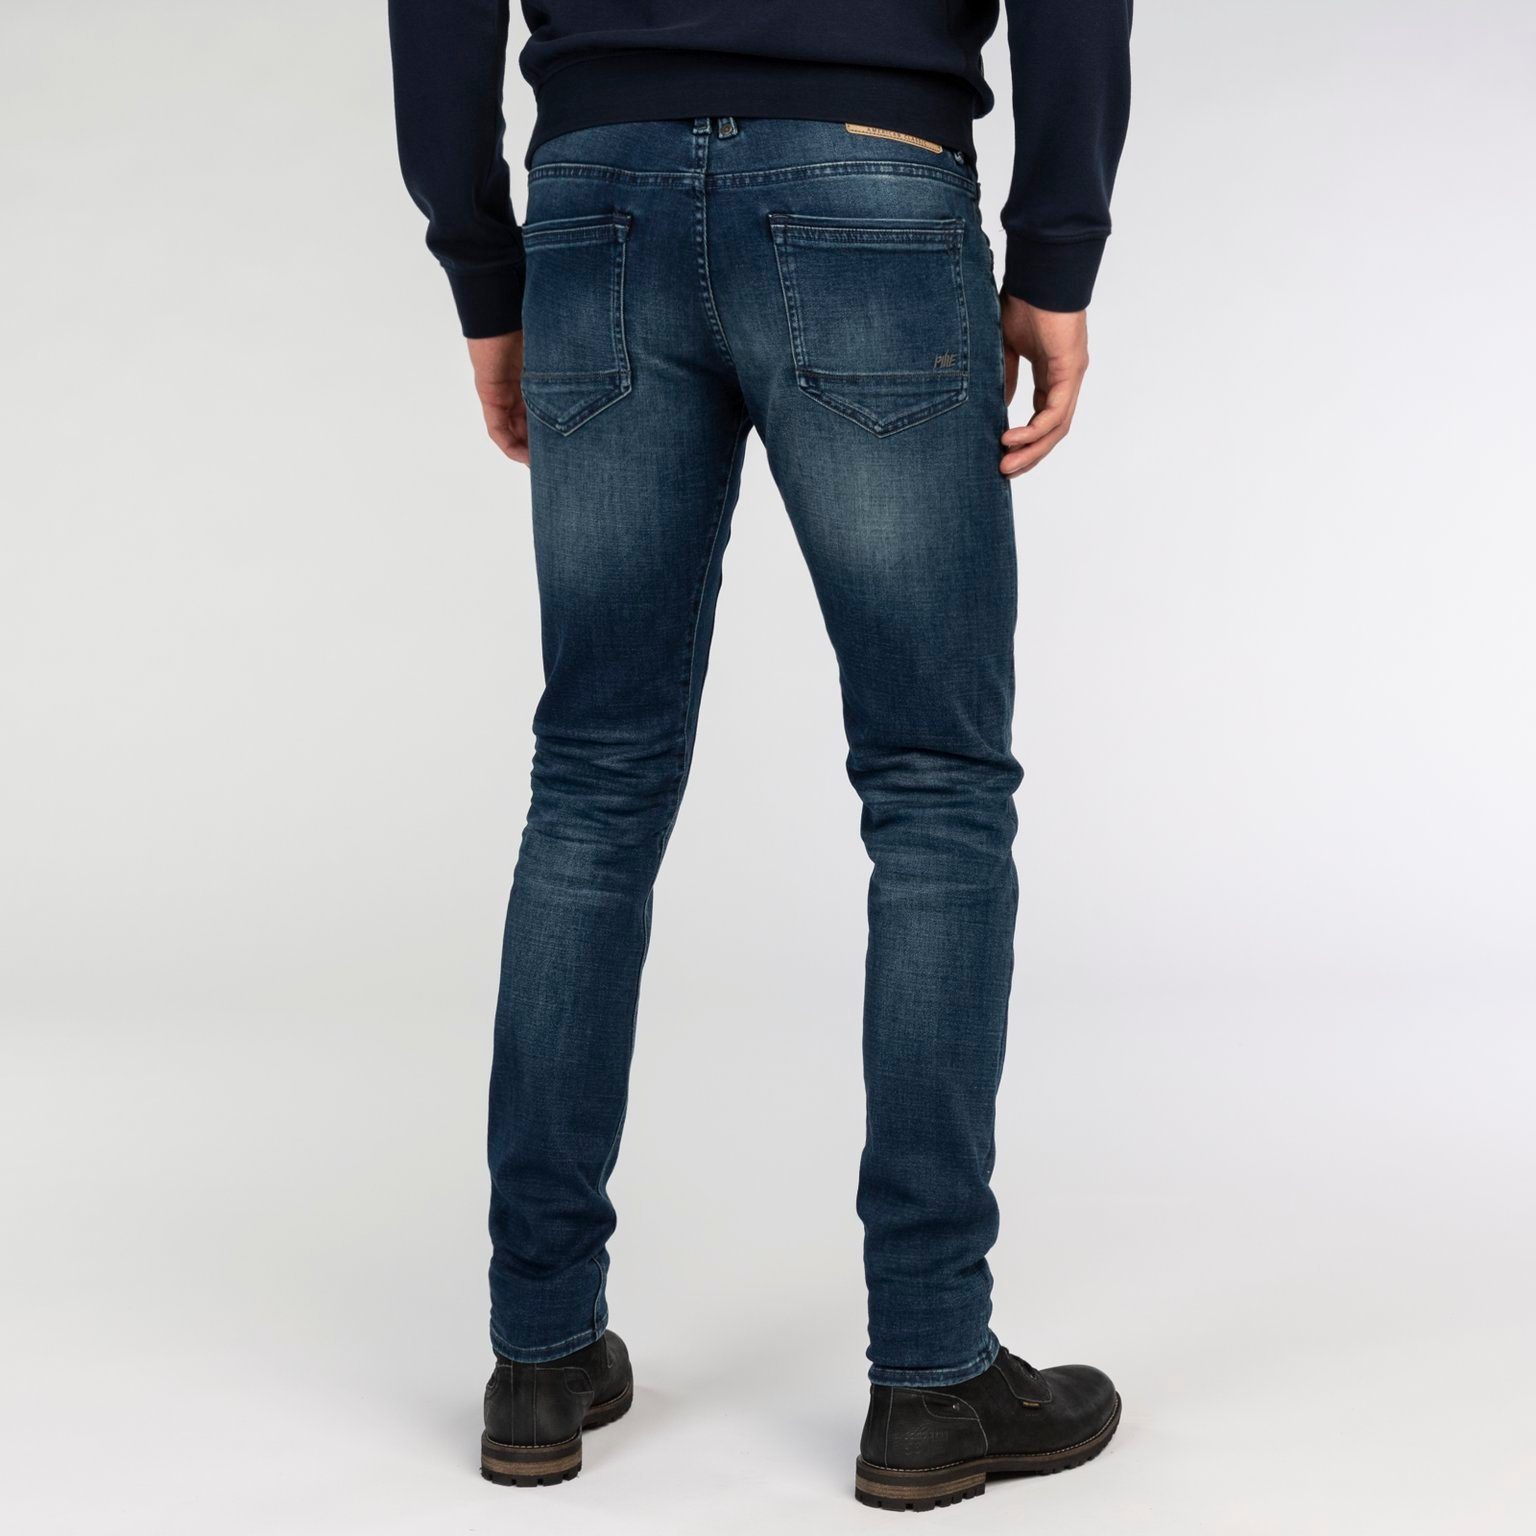 PME LEGEND PTR140-DBI 5-Pocket-Jeans LEGEND PME indigo blue dark TAILWHEEL